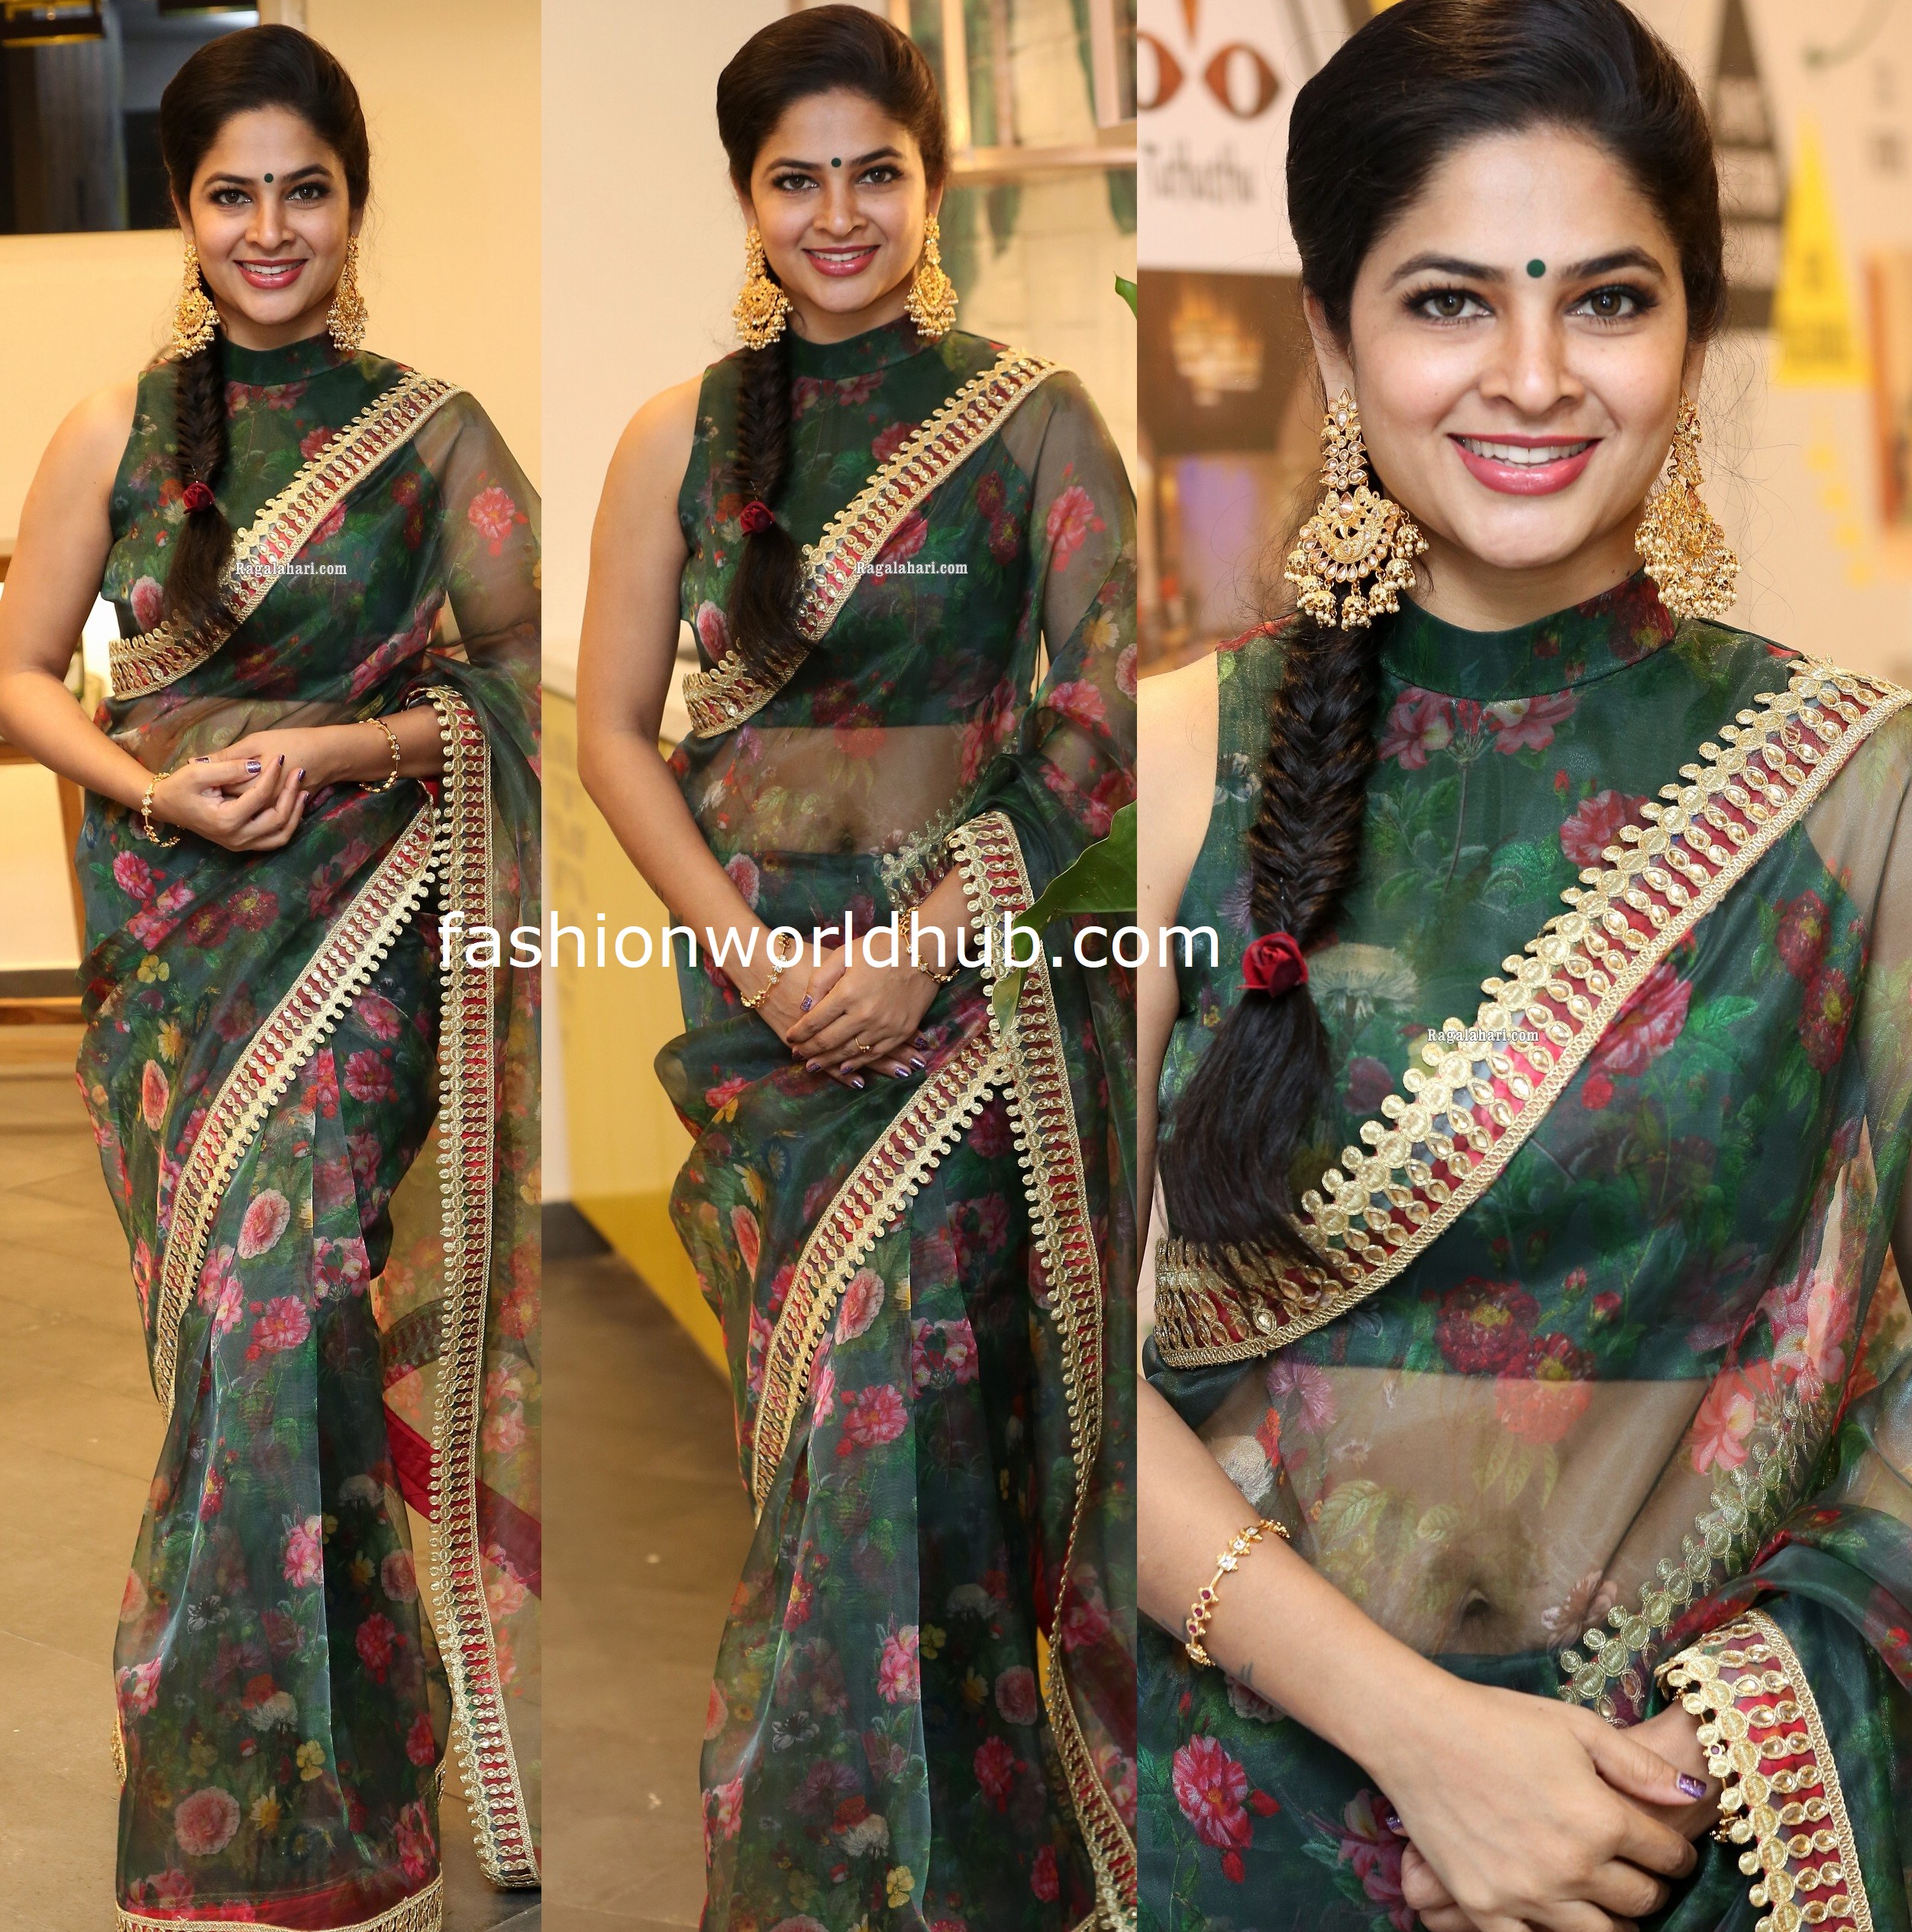 Madhumitha in a Green floral print organza saree! | Fashionworldhub